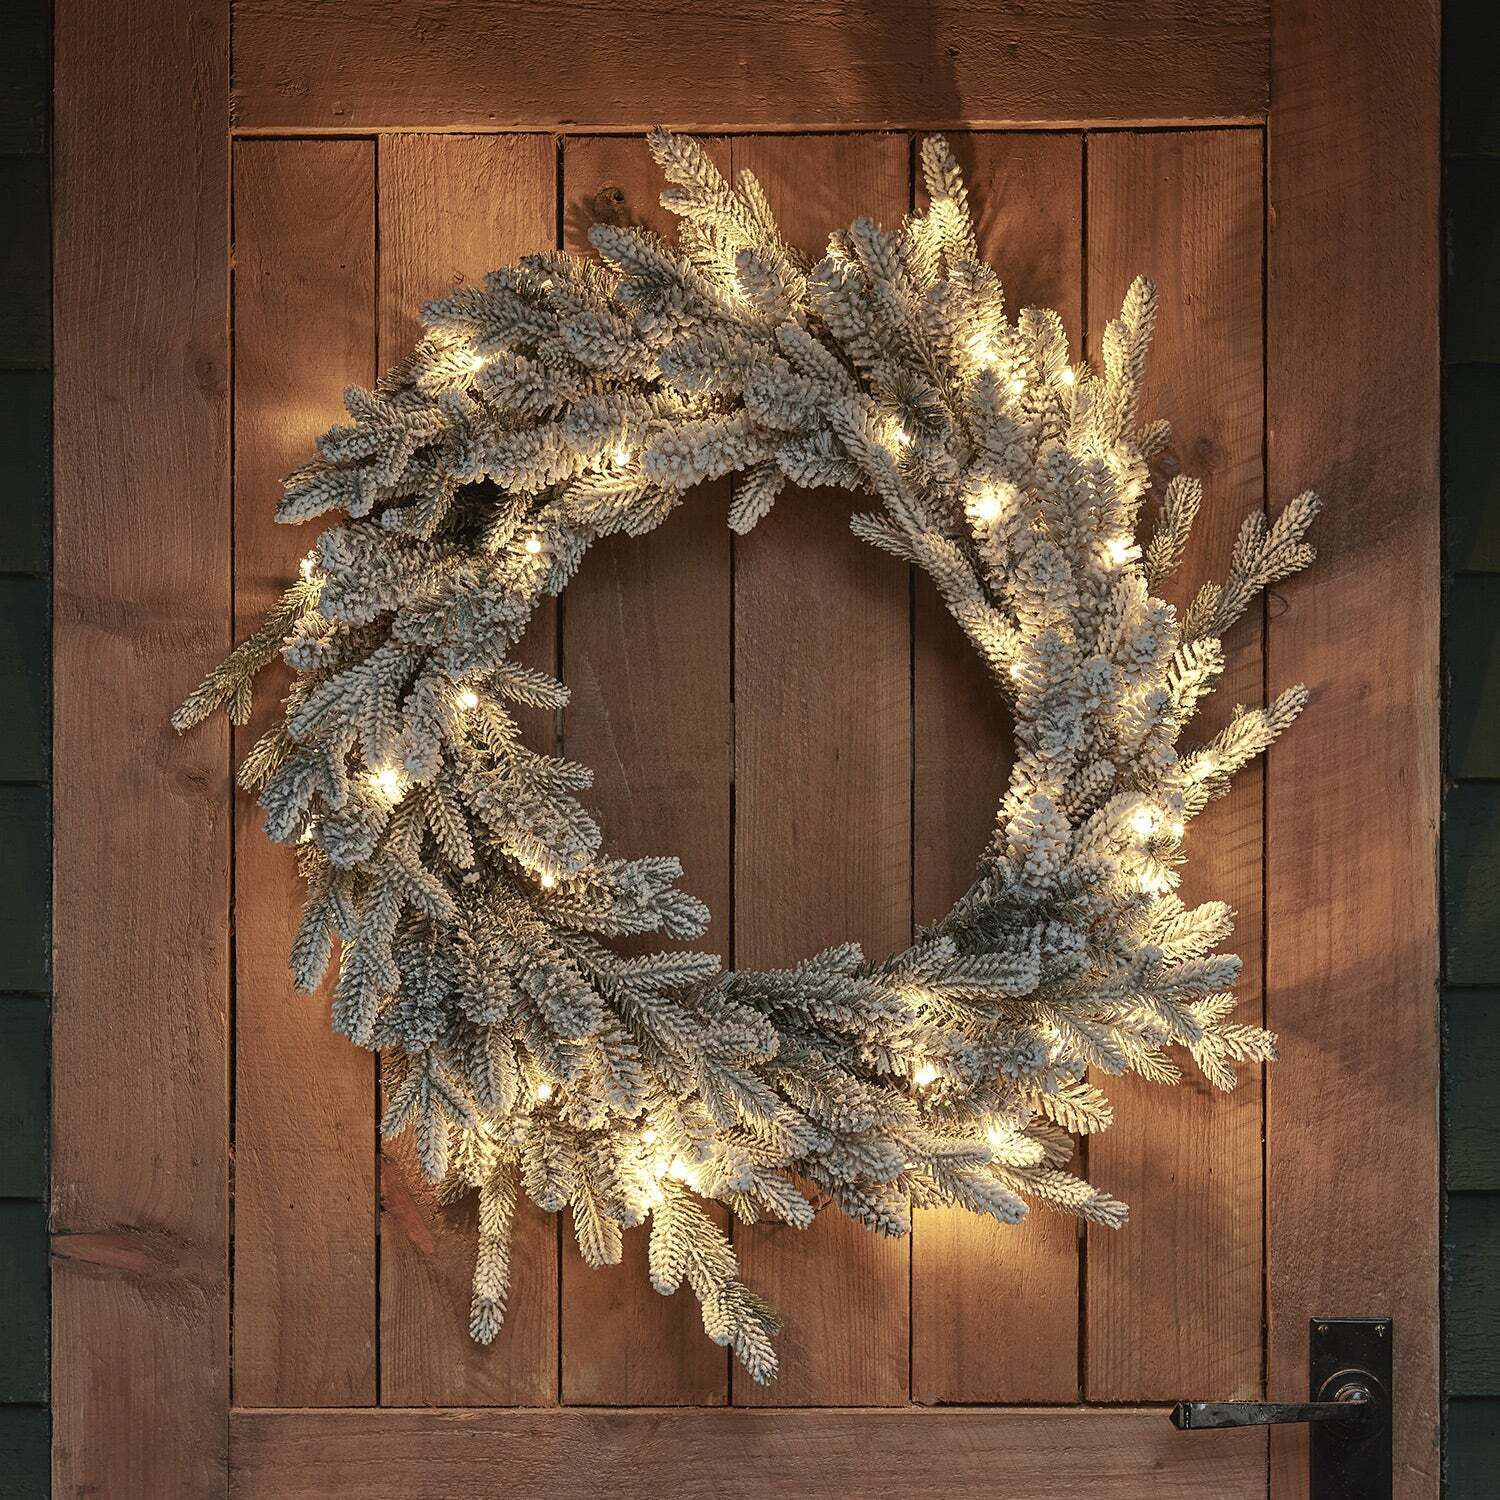 60cm Pre Lit Outdoor Snowy Christmas Wreath - image 1